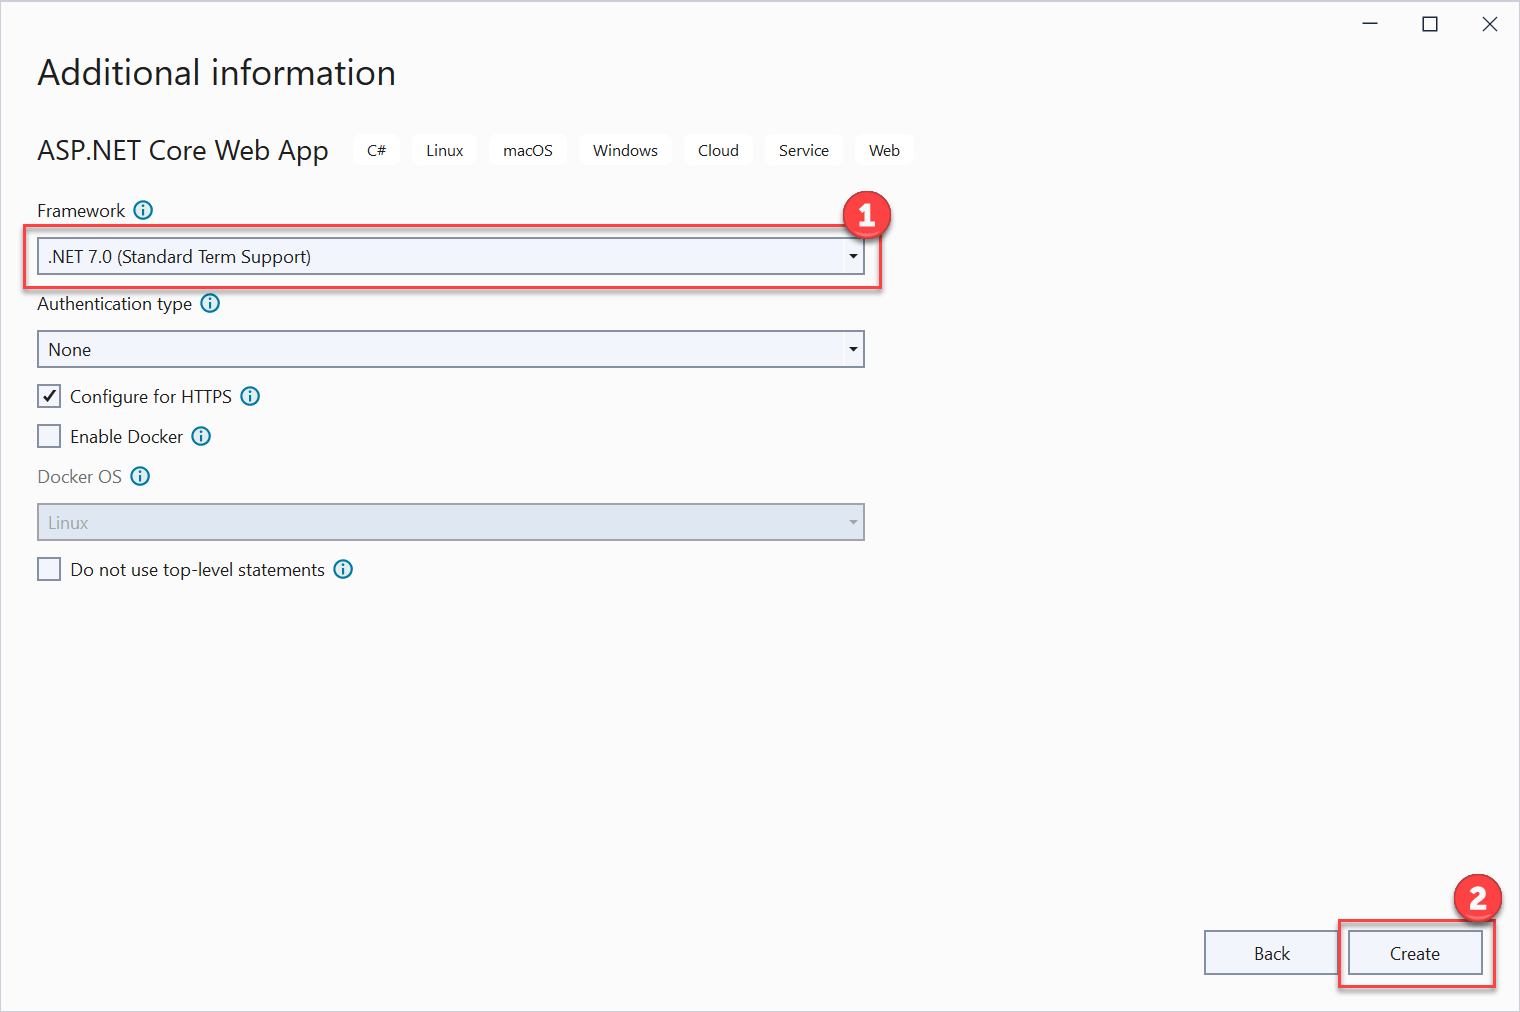 Additional information 对话框显示，其中选择了 .NET 7.0 作为框架，Create 按钮突出显示。